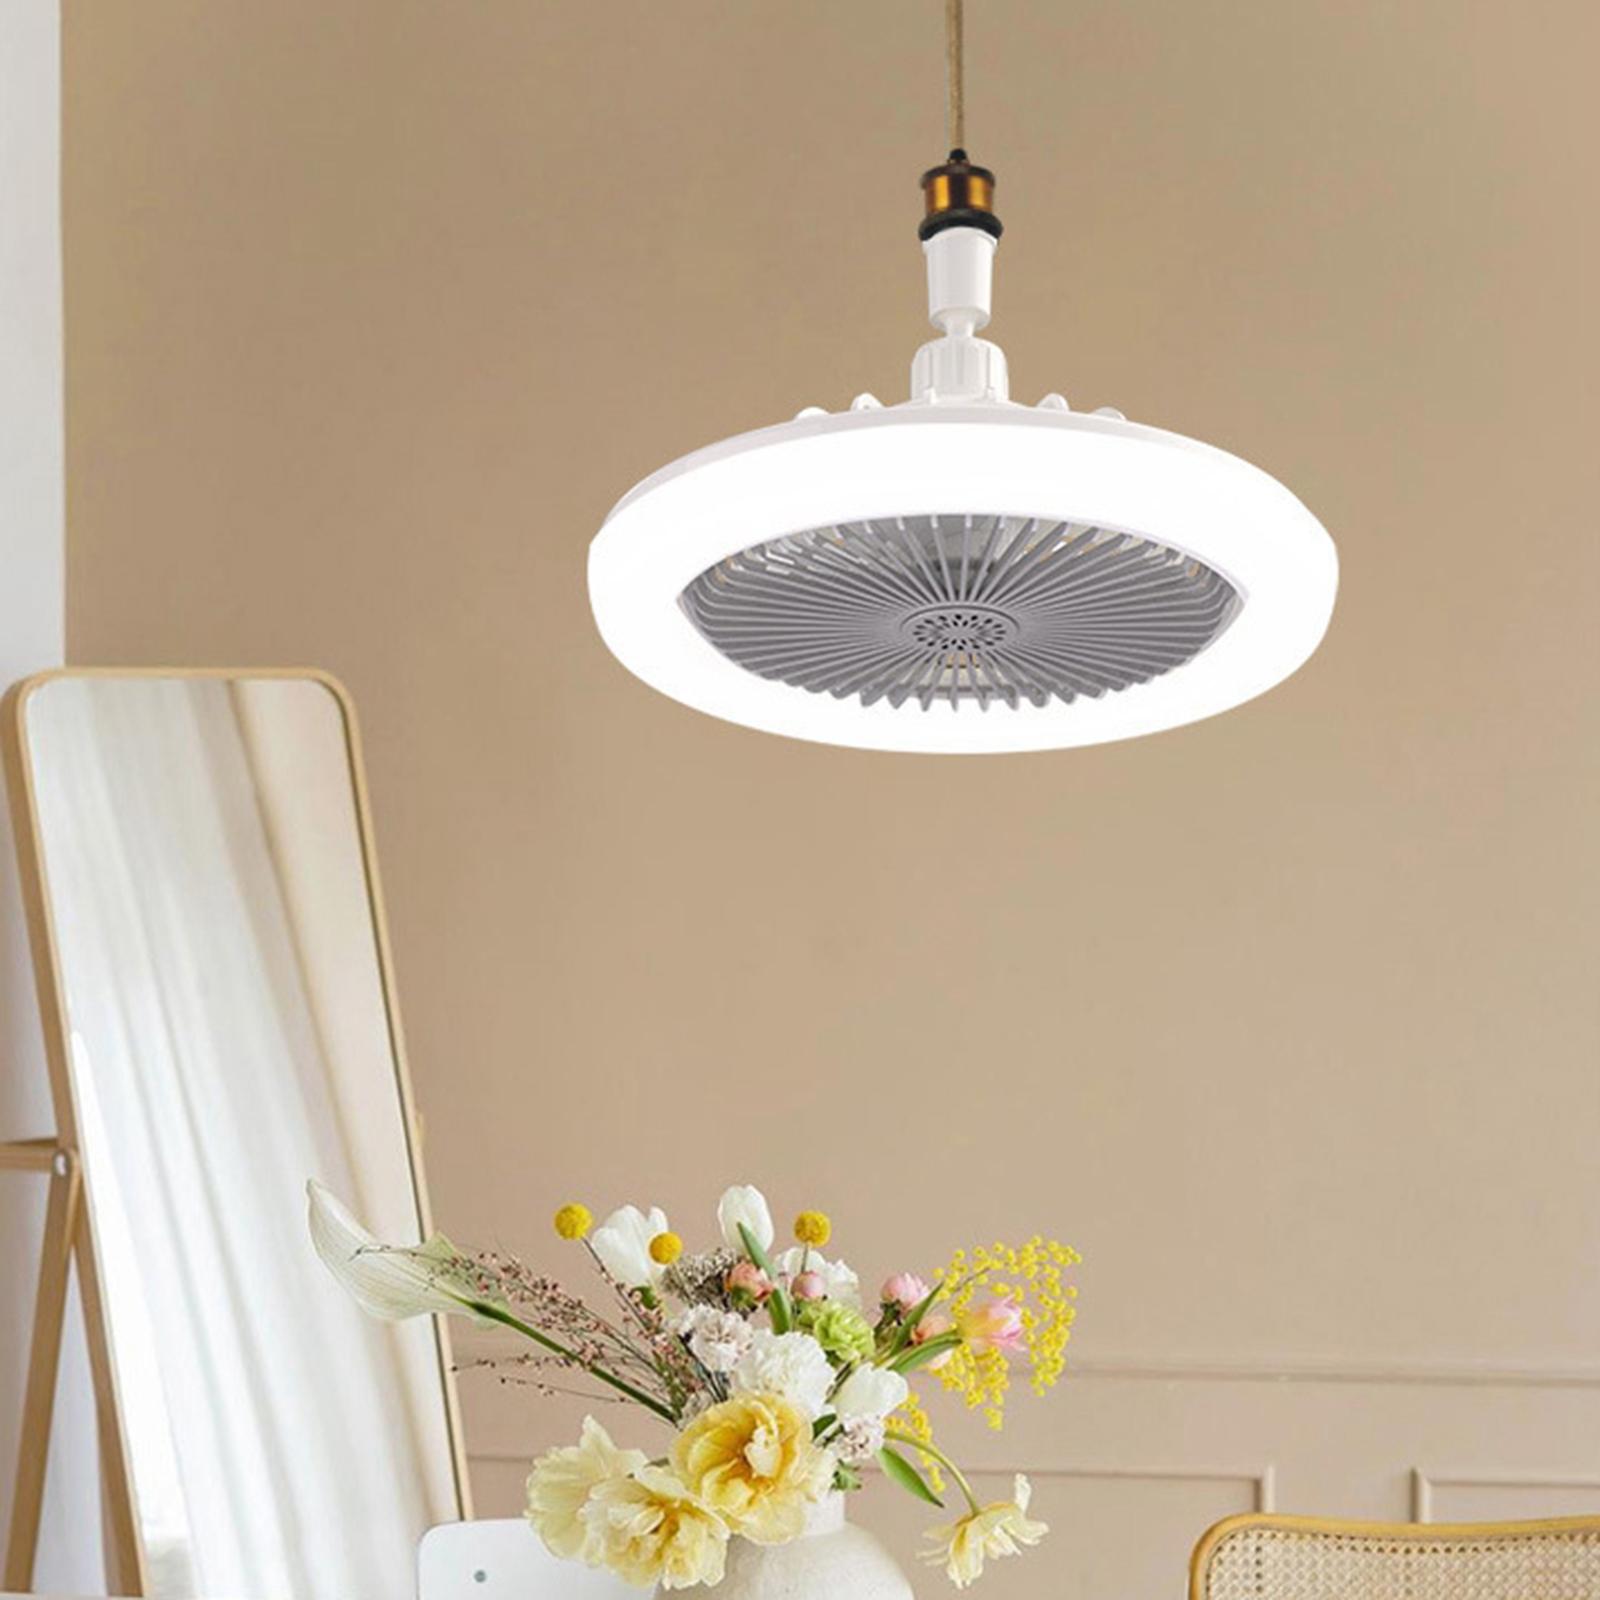 Ceiling Fan Lights E27 Fan Light for Bedroom Dining Room Office Gray